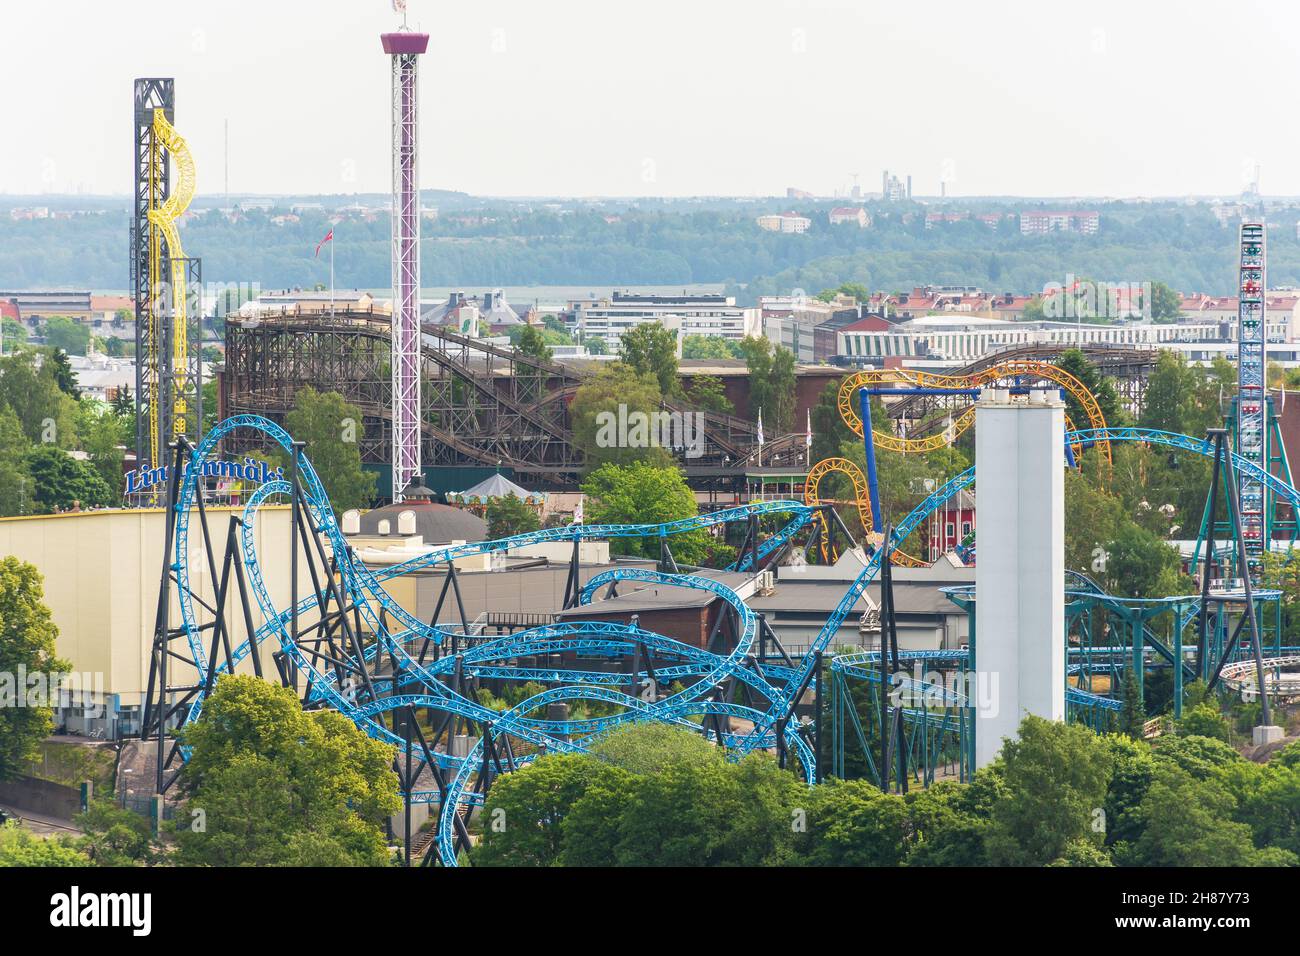 Linnanmäki Amusement park seen from the Olympic Stadium Tower in Helsinki Finland Stock Photo